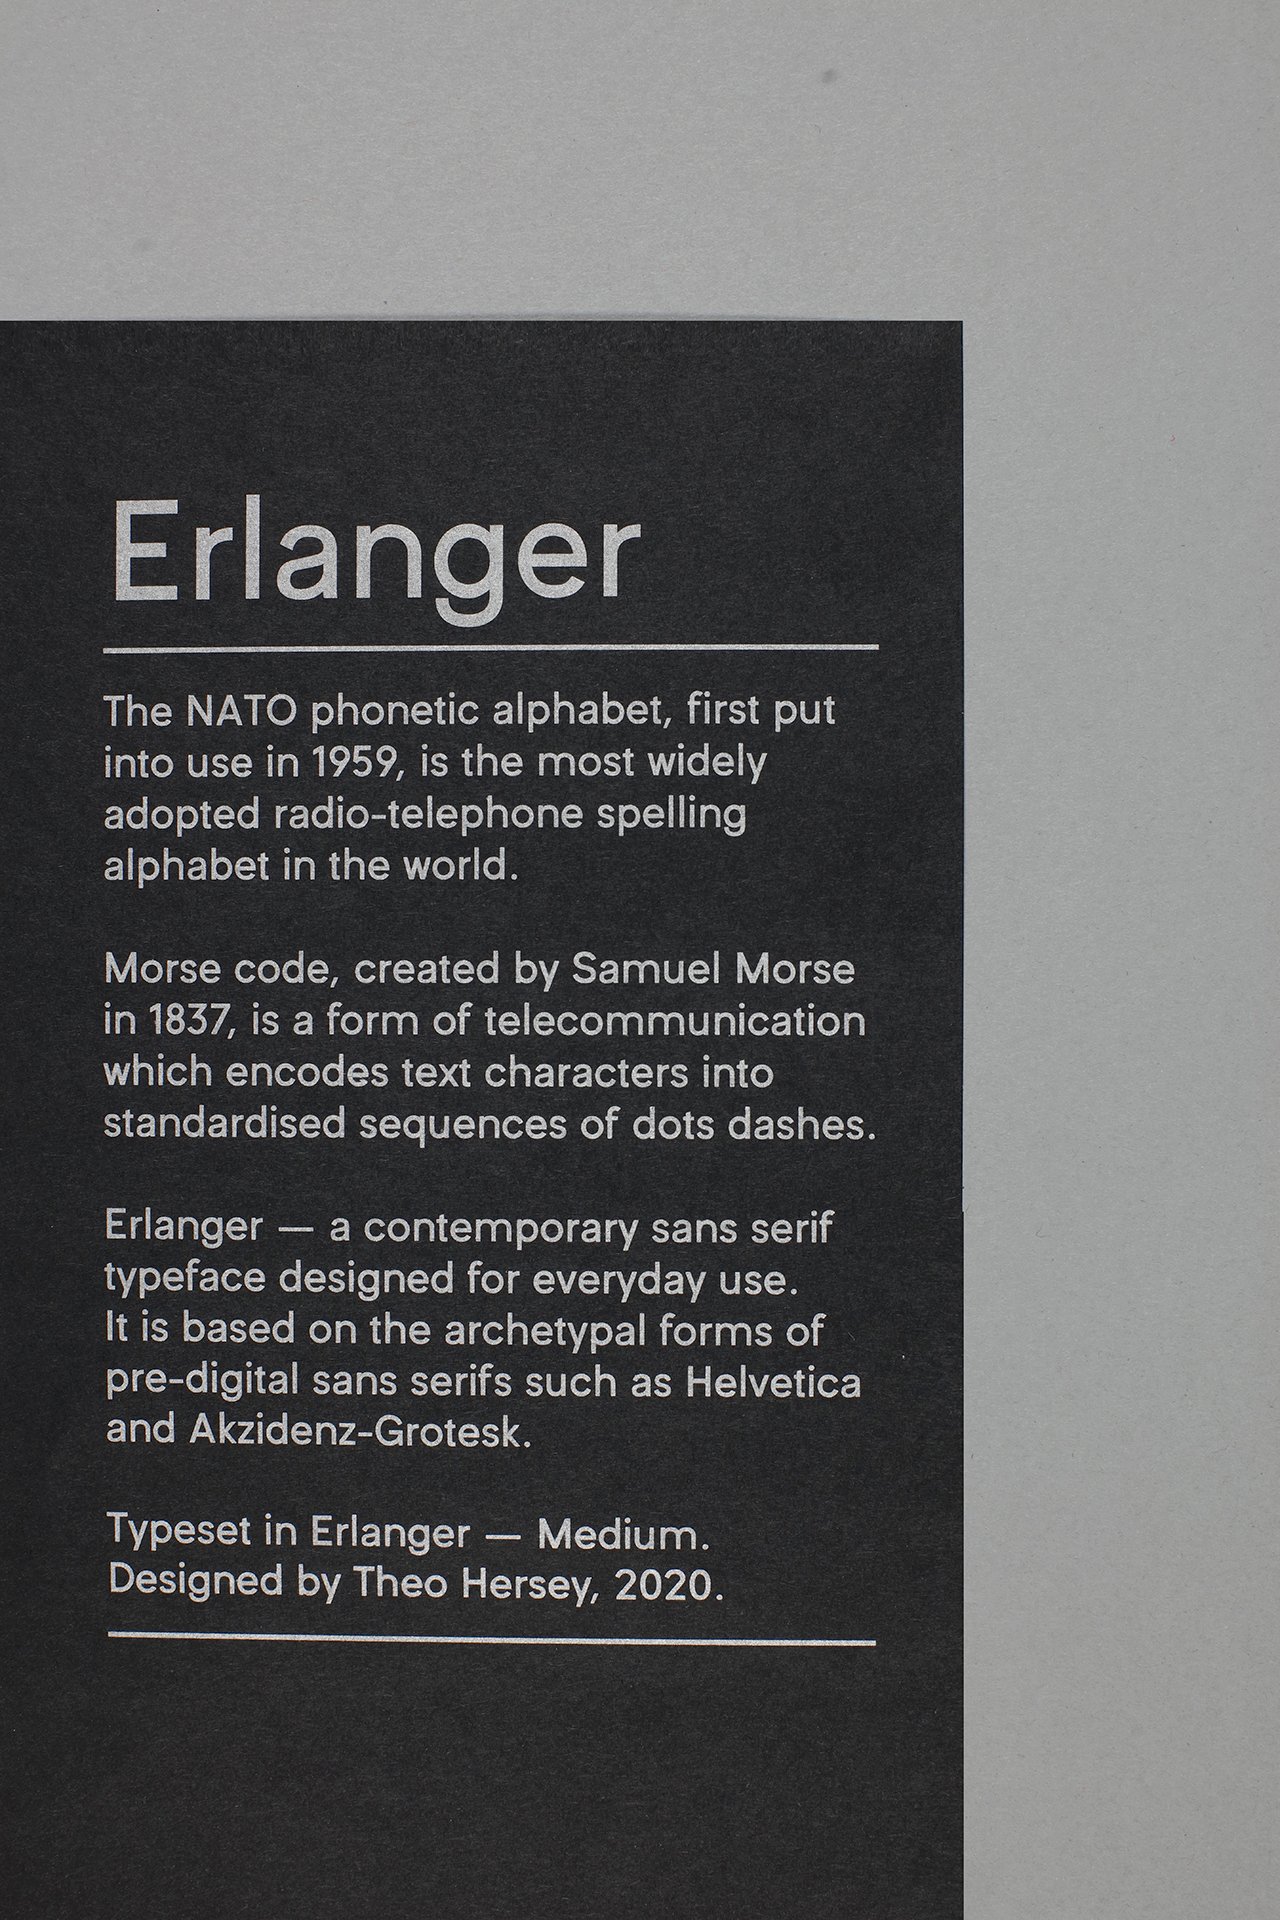 Information on the three components of the Erlanger specimen poster: the NATO phonetic alphabet, Morse code &amp; Erlanger.